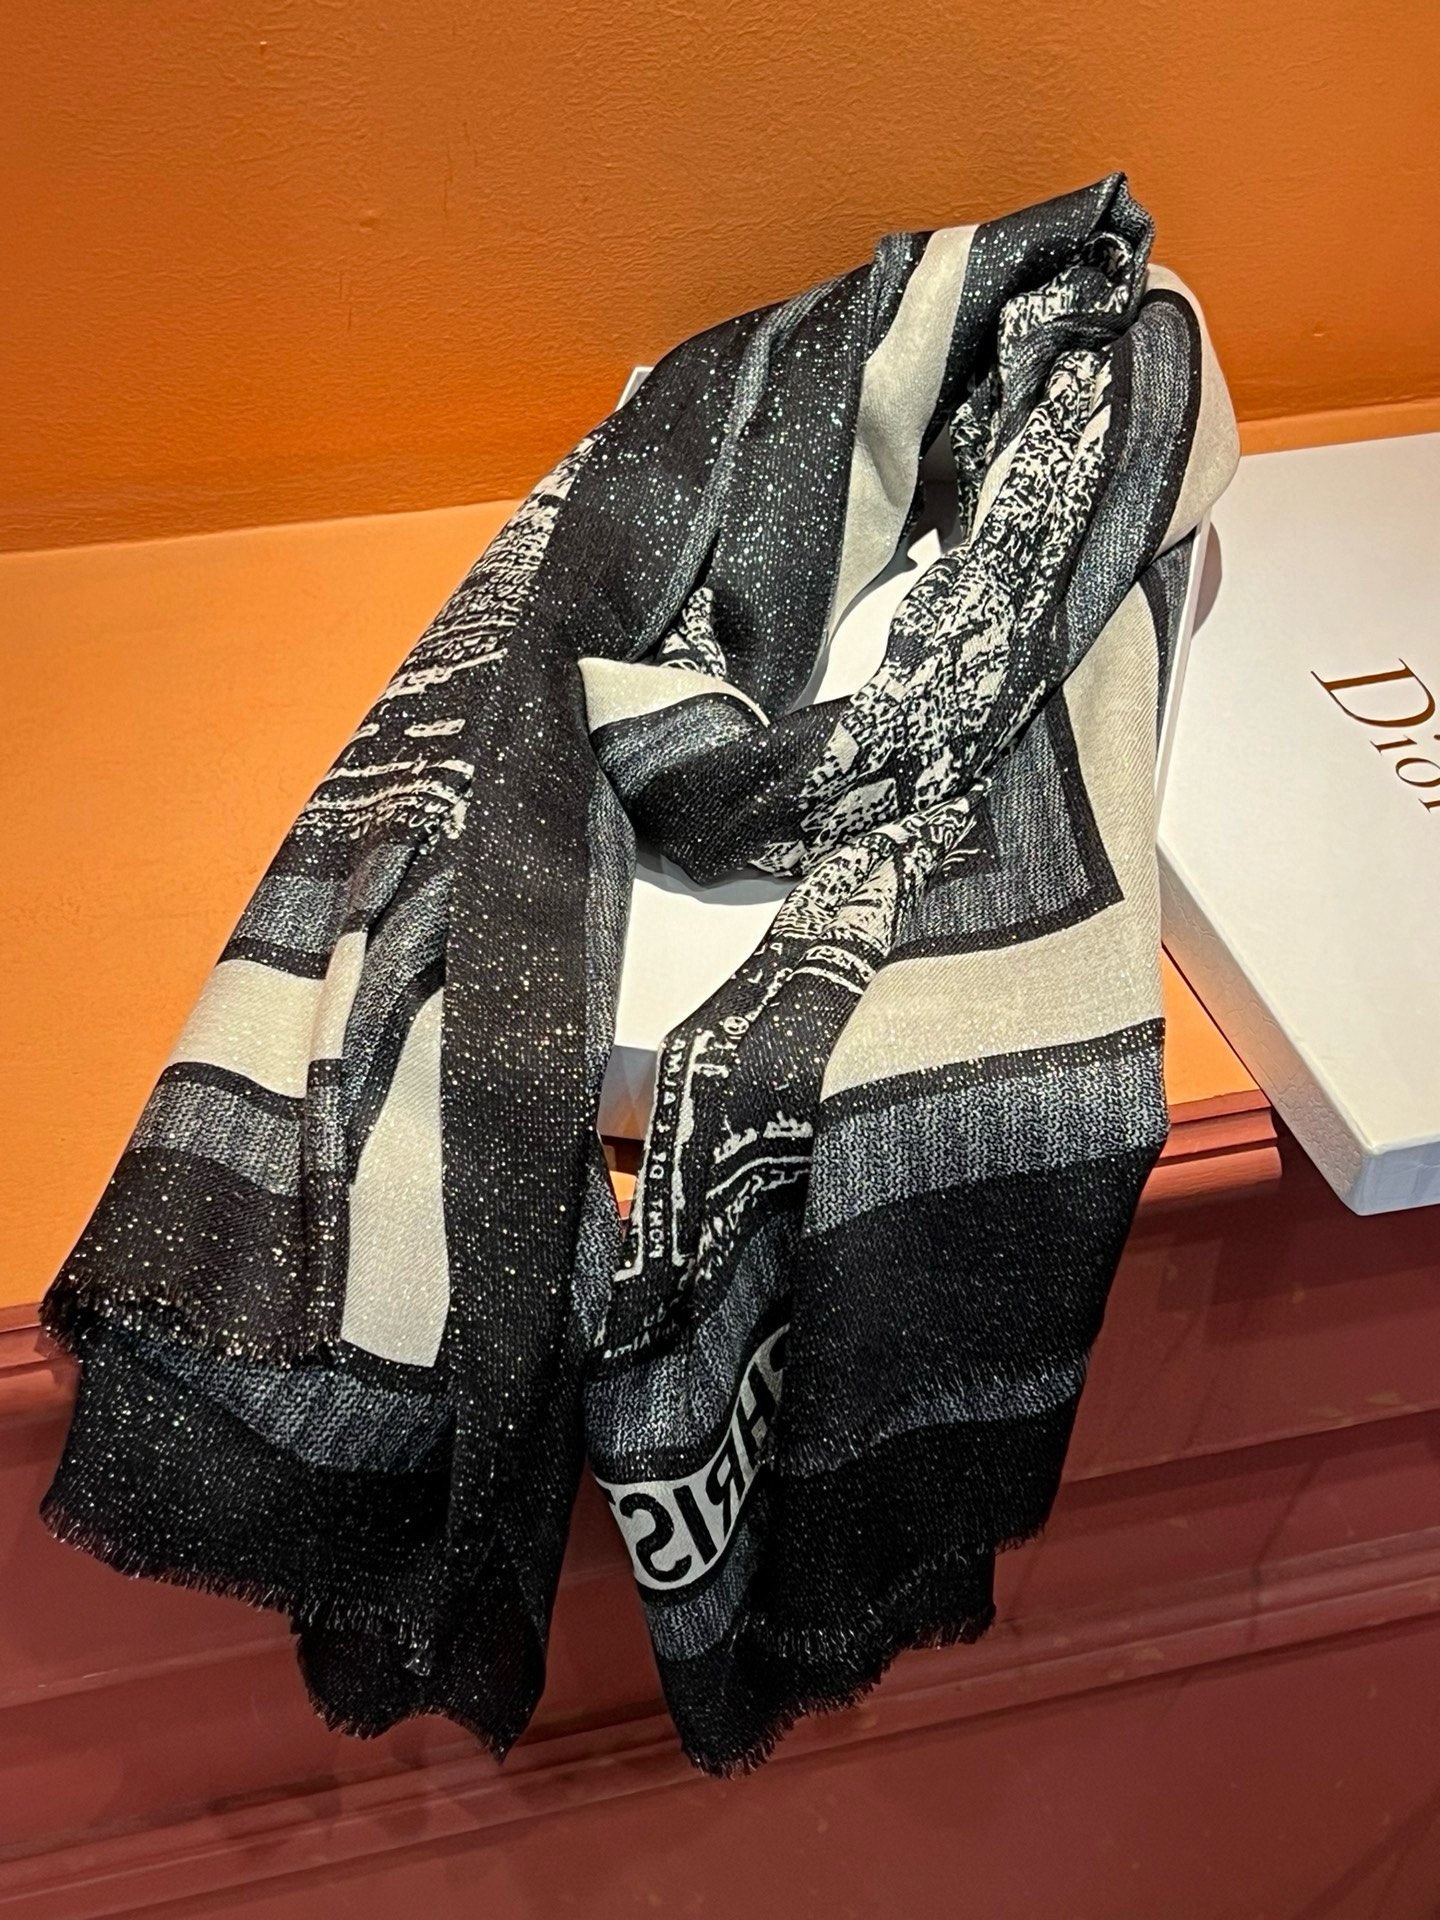 Dior会发光发亮的围巾️巴黎地图银丝长巾PLANDEPARIS巴黎地图这款方巾饰以本季经典的Pland